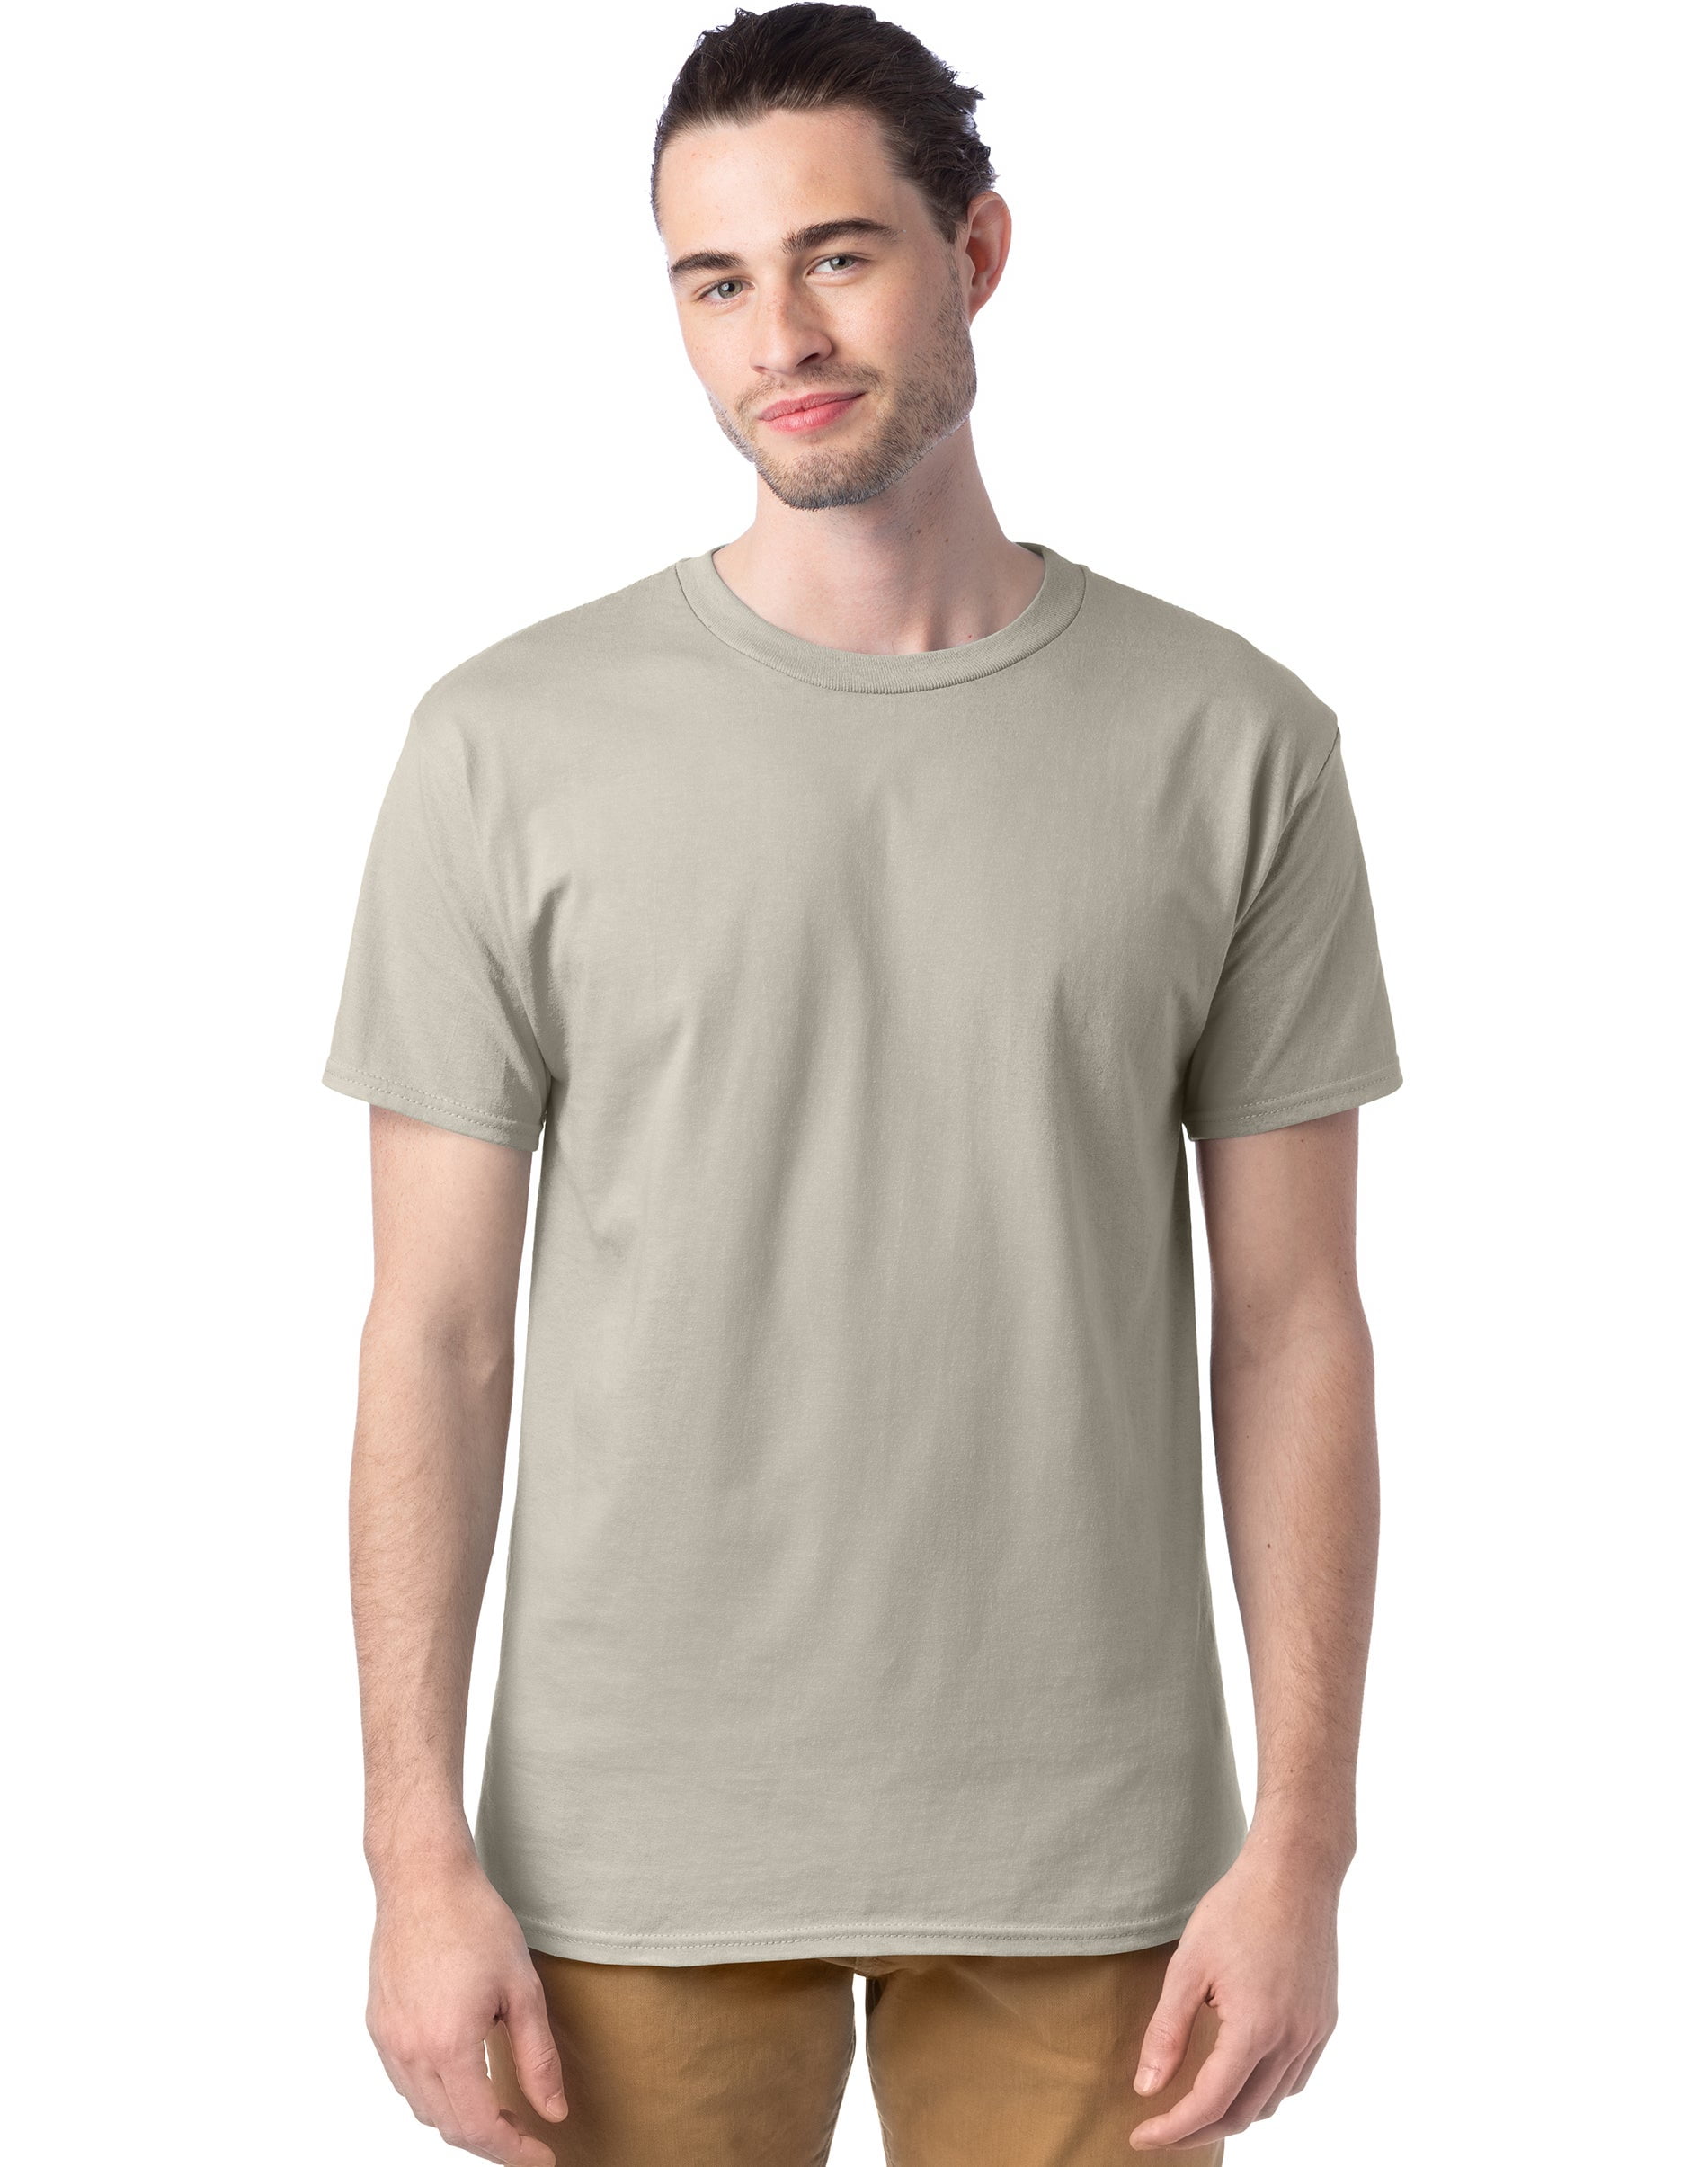 Essentials T-Shirt, Hanes Cotton Sand 3XL Men\'s 4-Pack